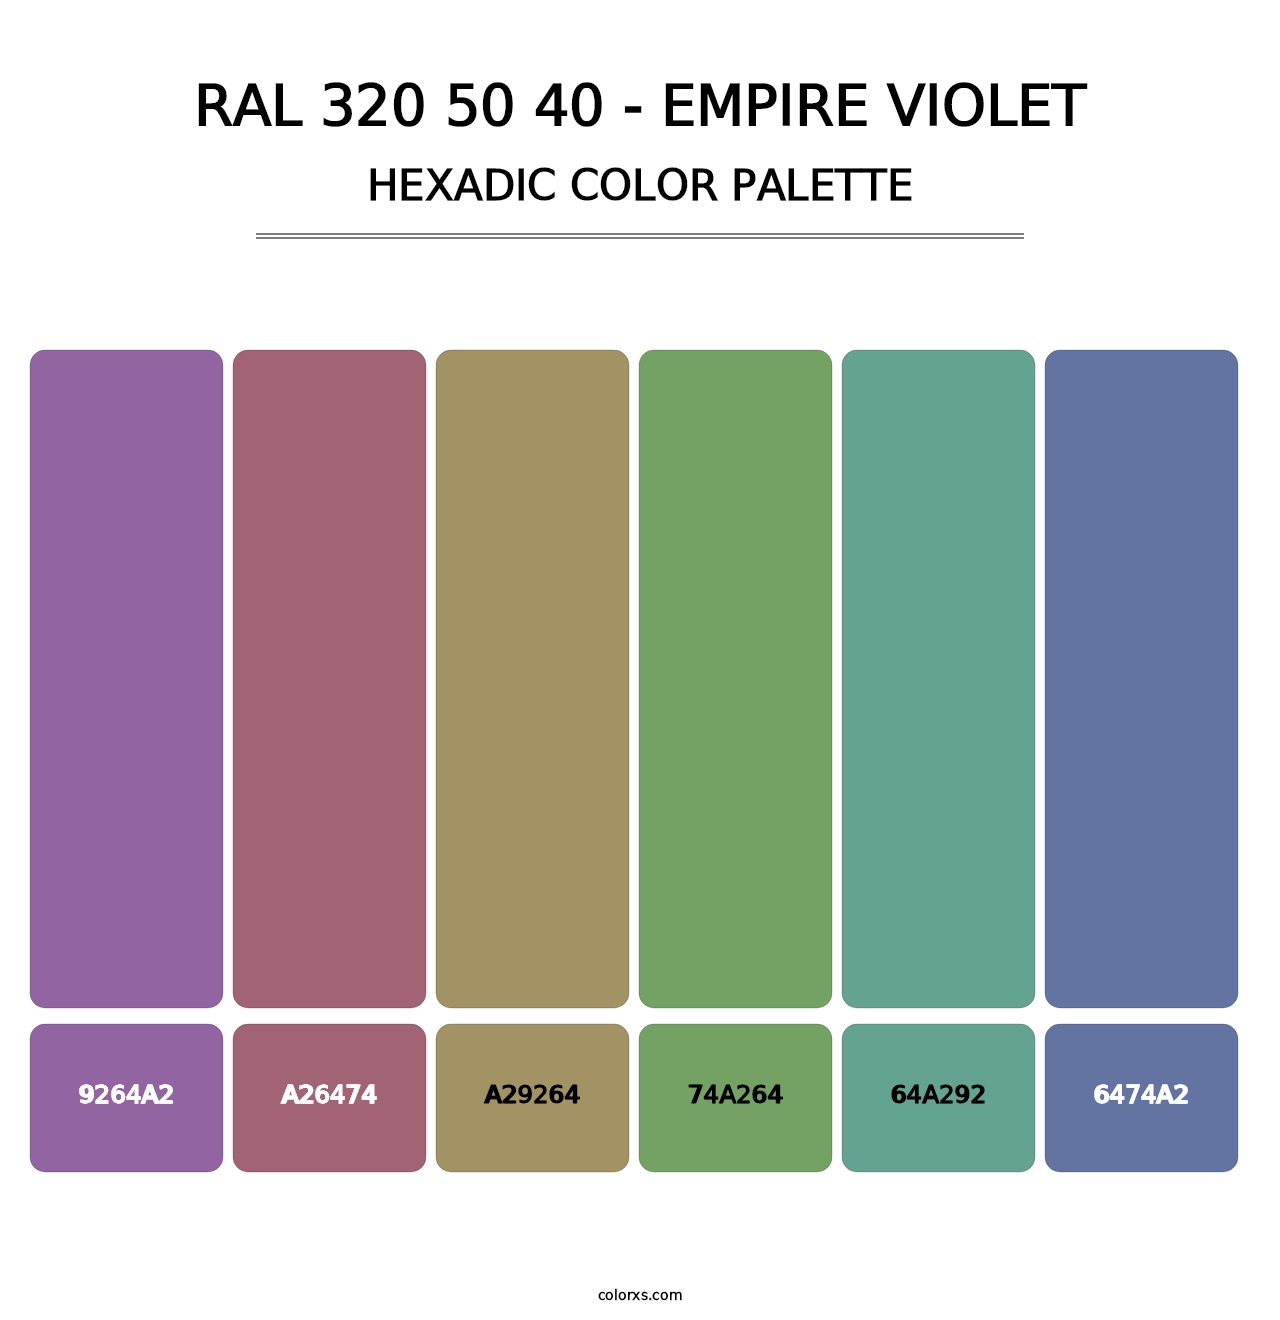 RAL 320 50 40 - Empire Violet - Hexadic Color Palette